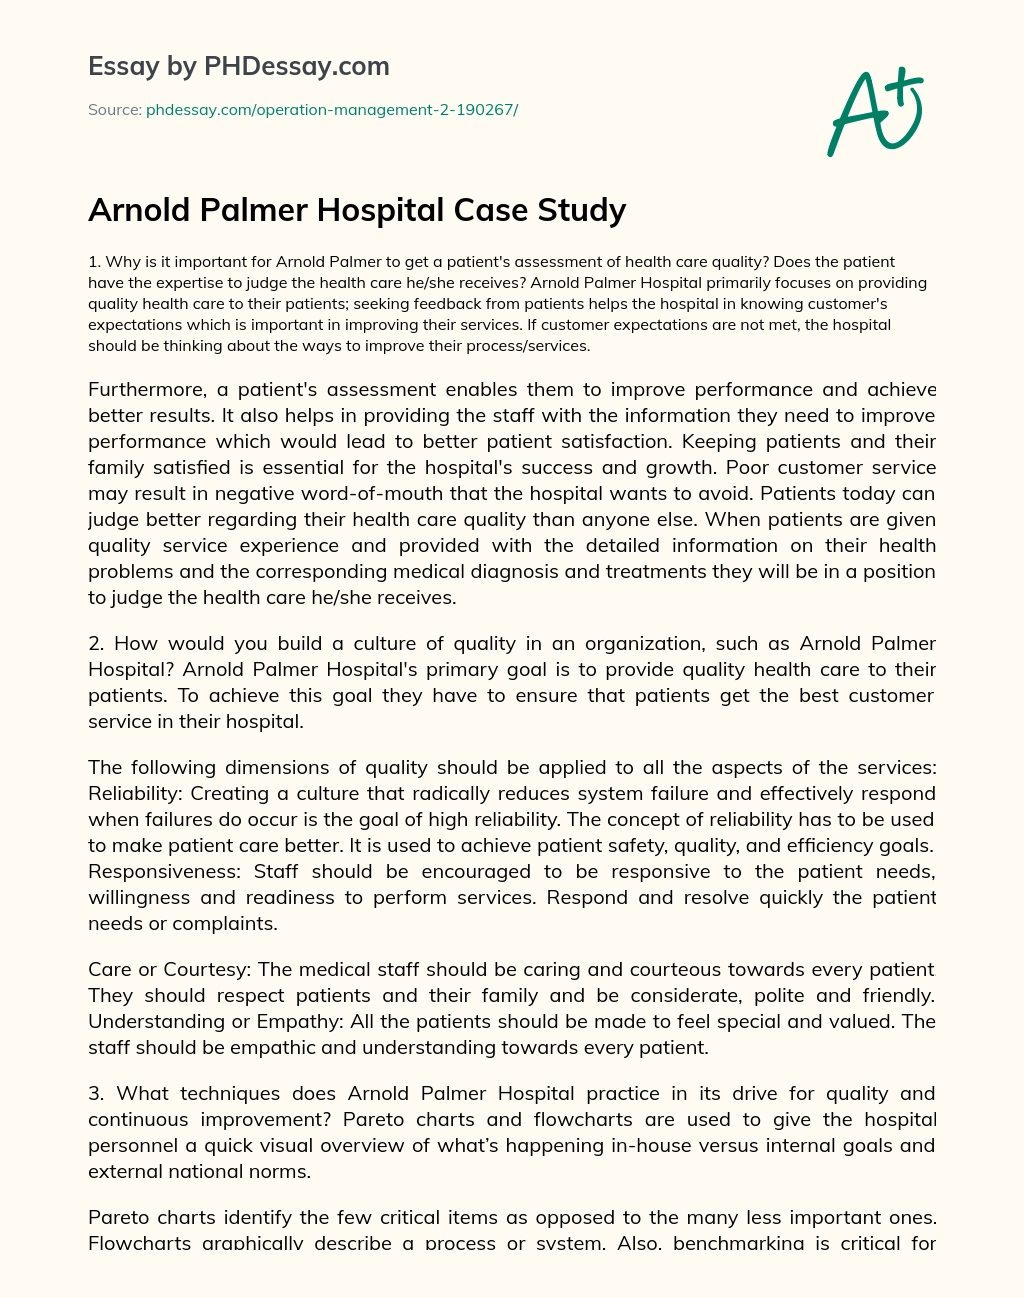 Arnold Palmer Hospital Case Study essay